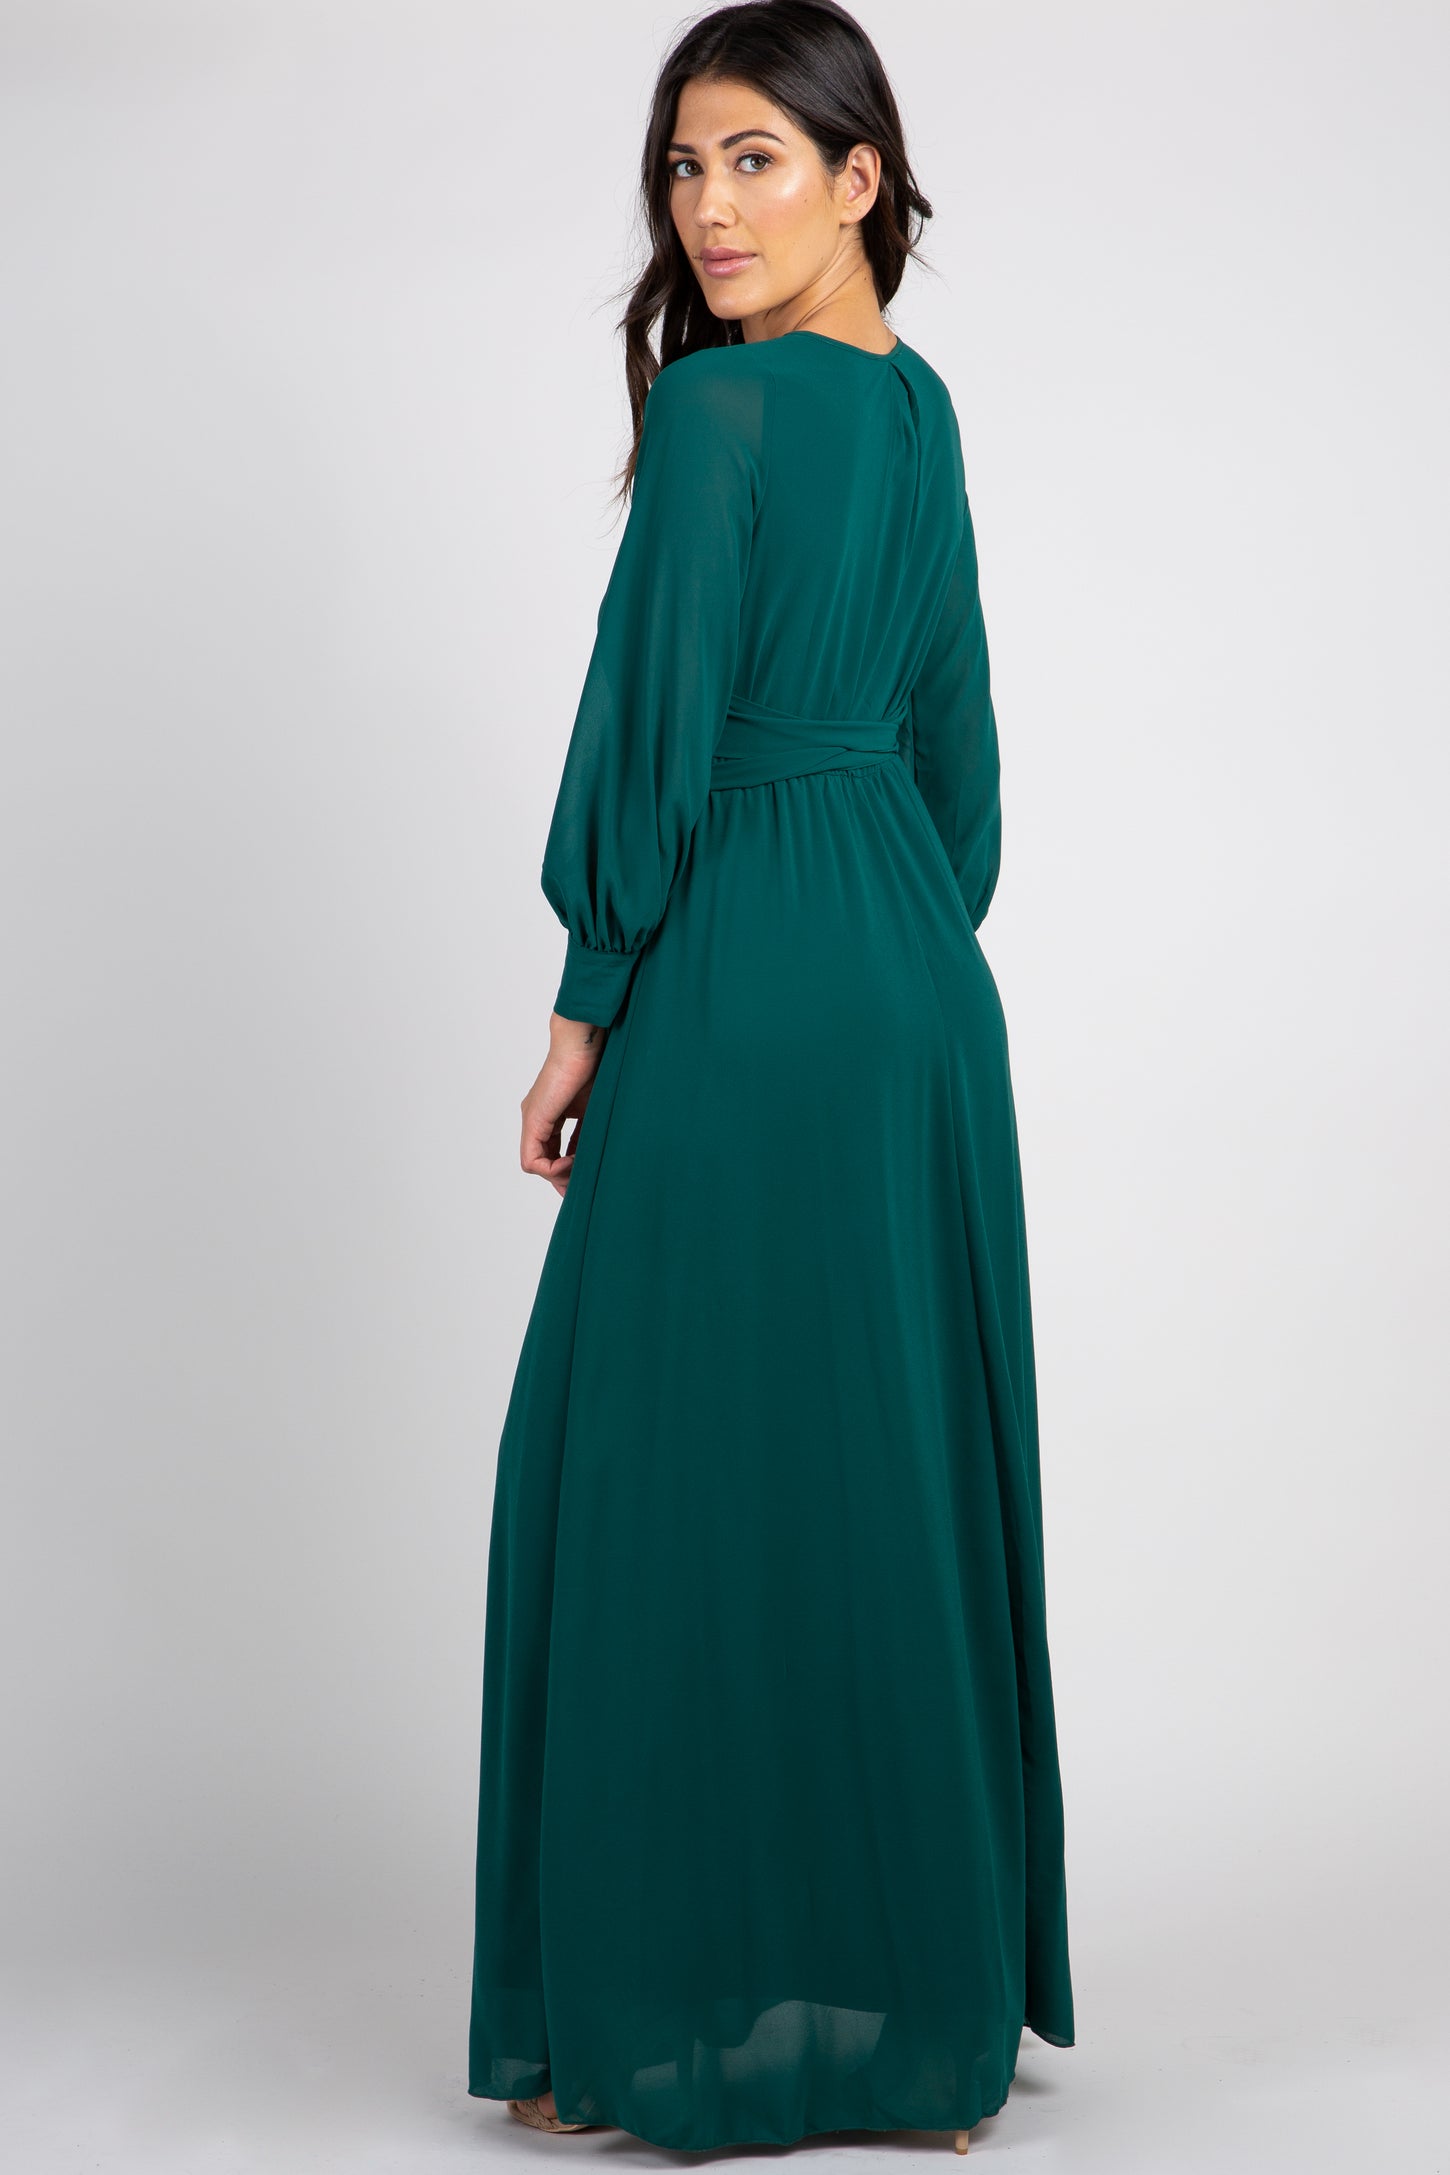 Green Chiffon Long Sleeve Pleated Maxi Dress